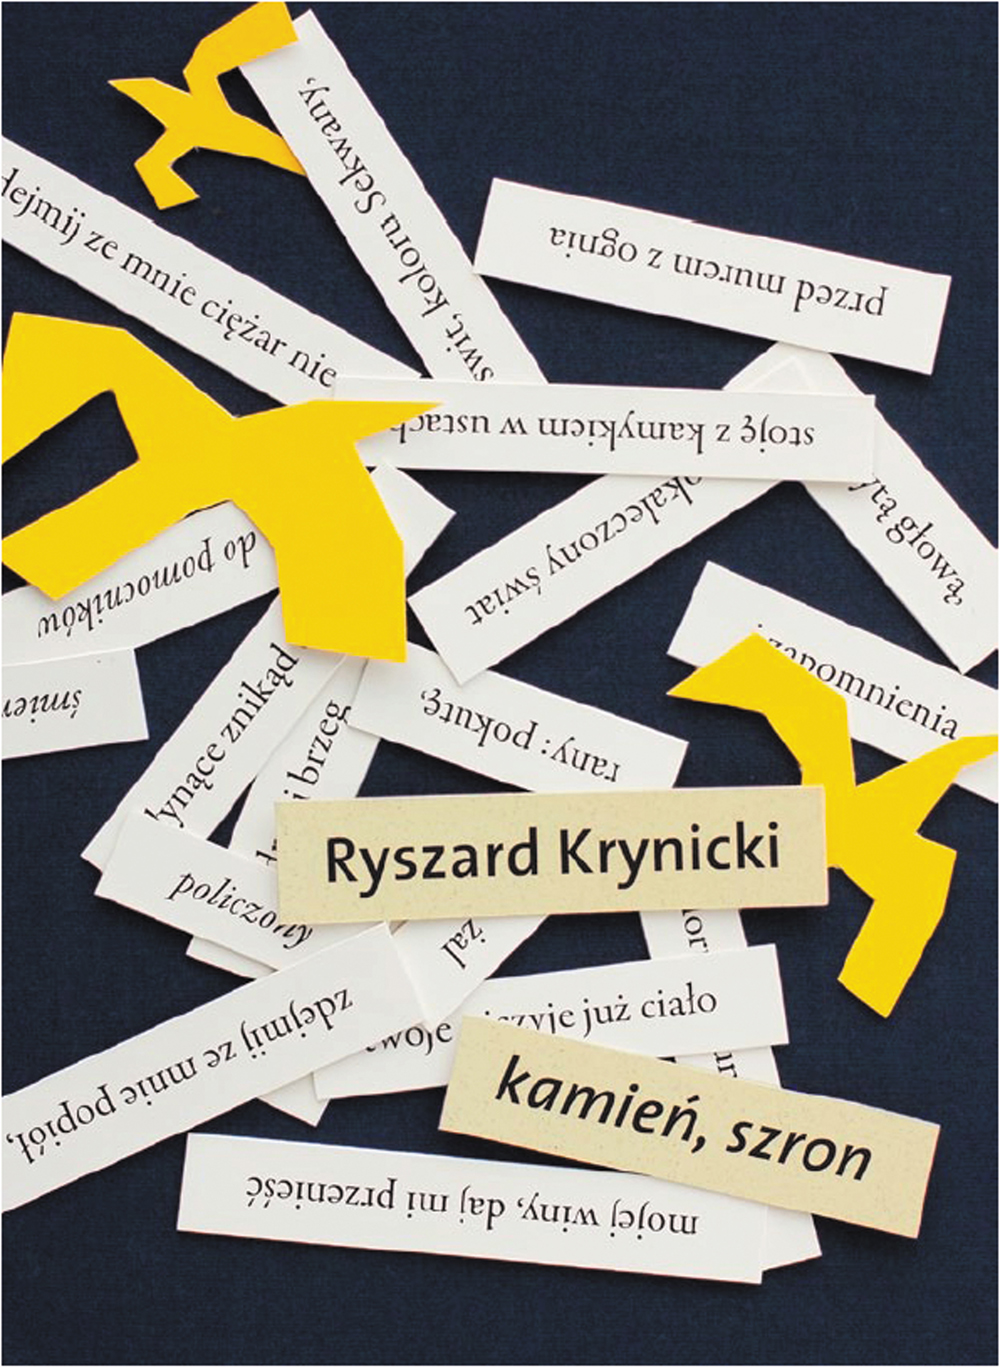 Ryszard Krynicki "Kamień, szron", okładka